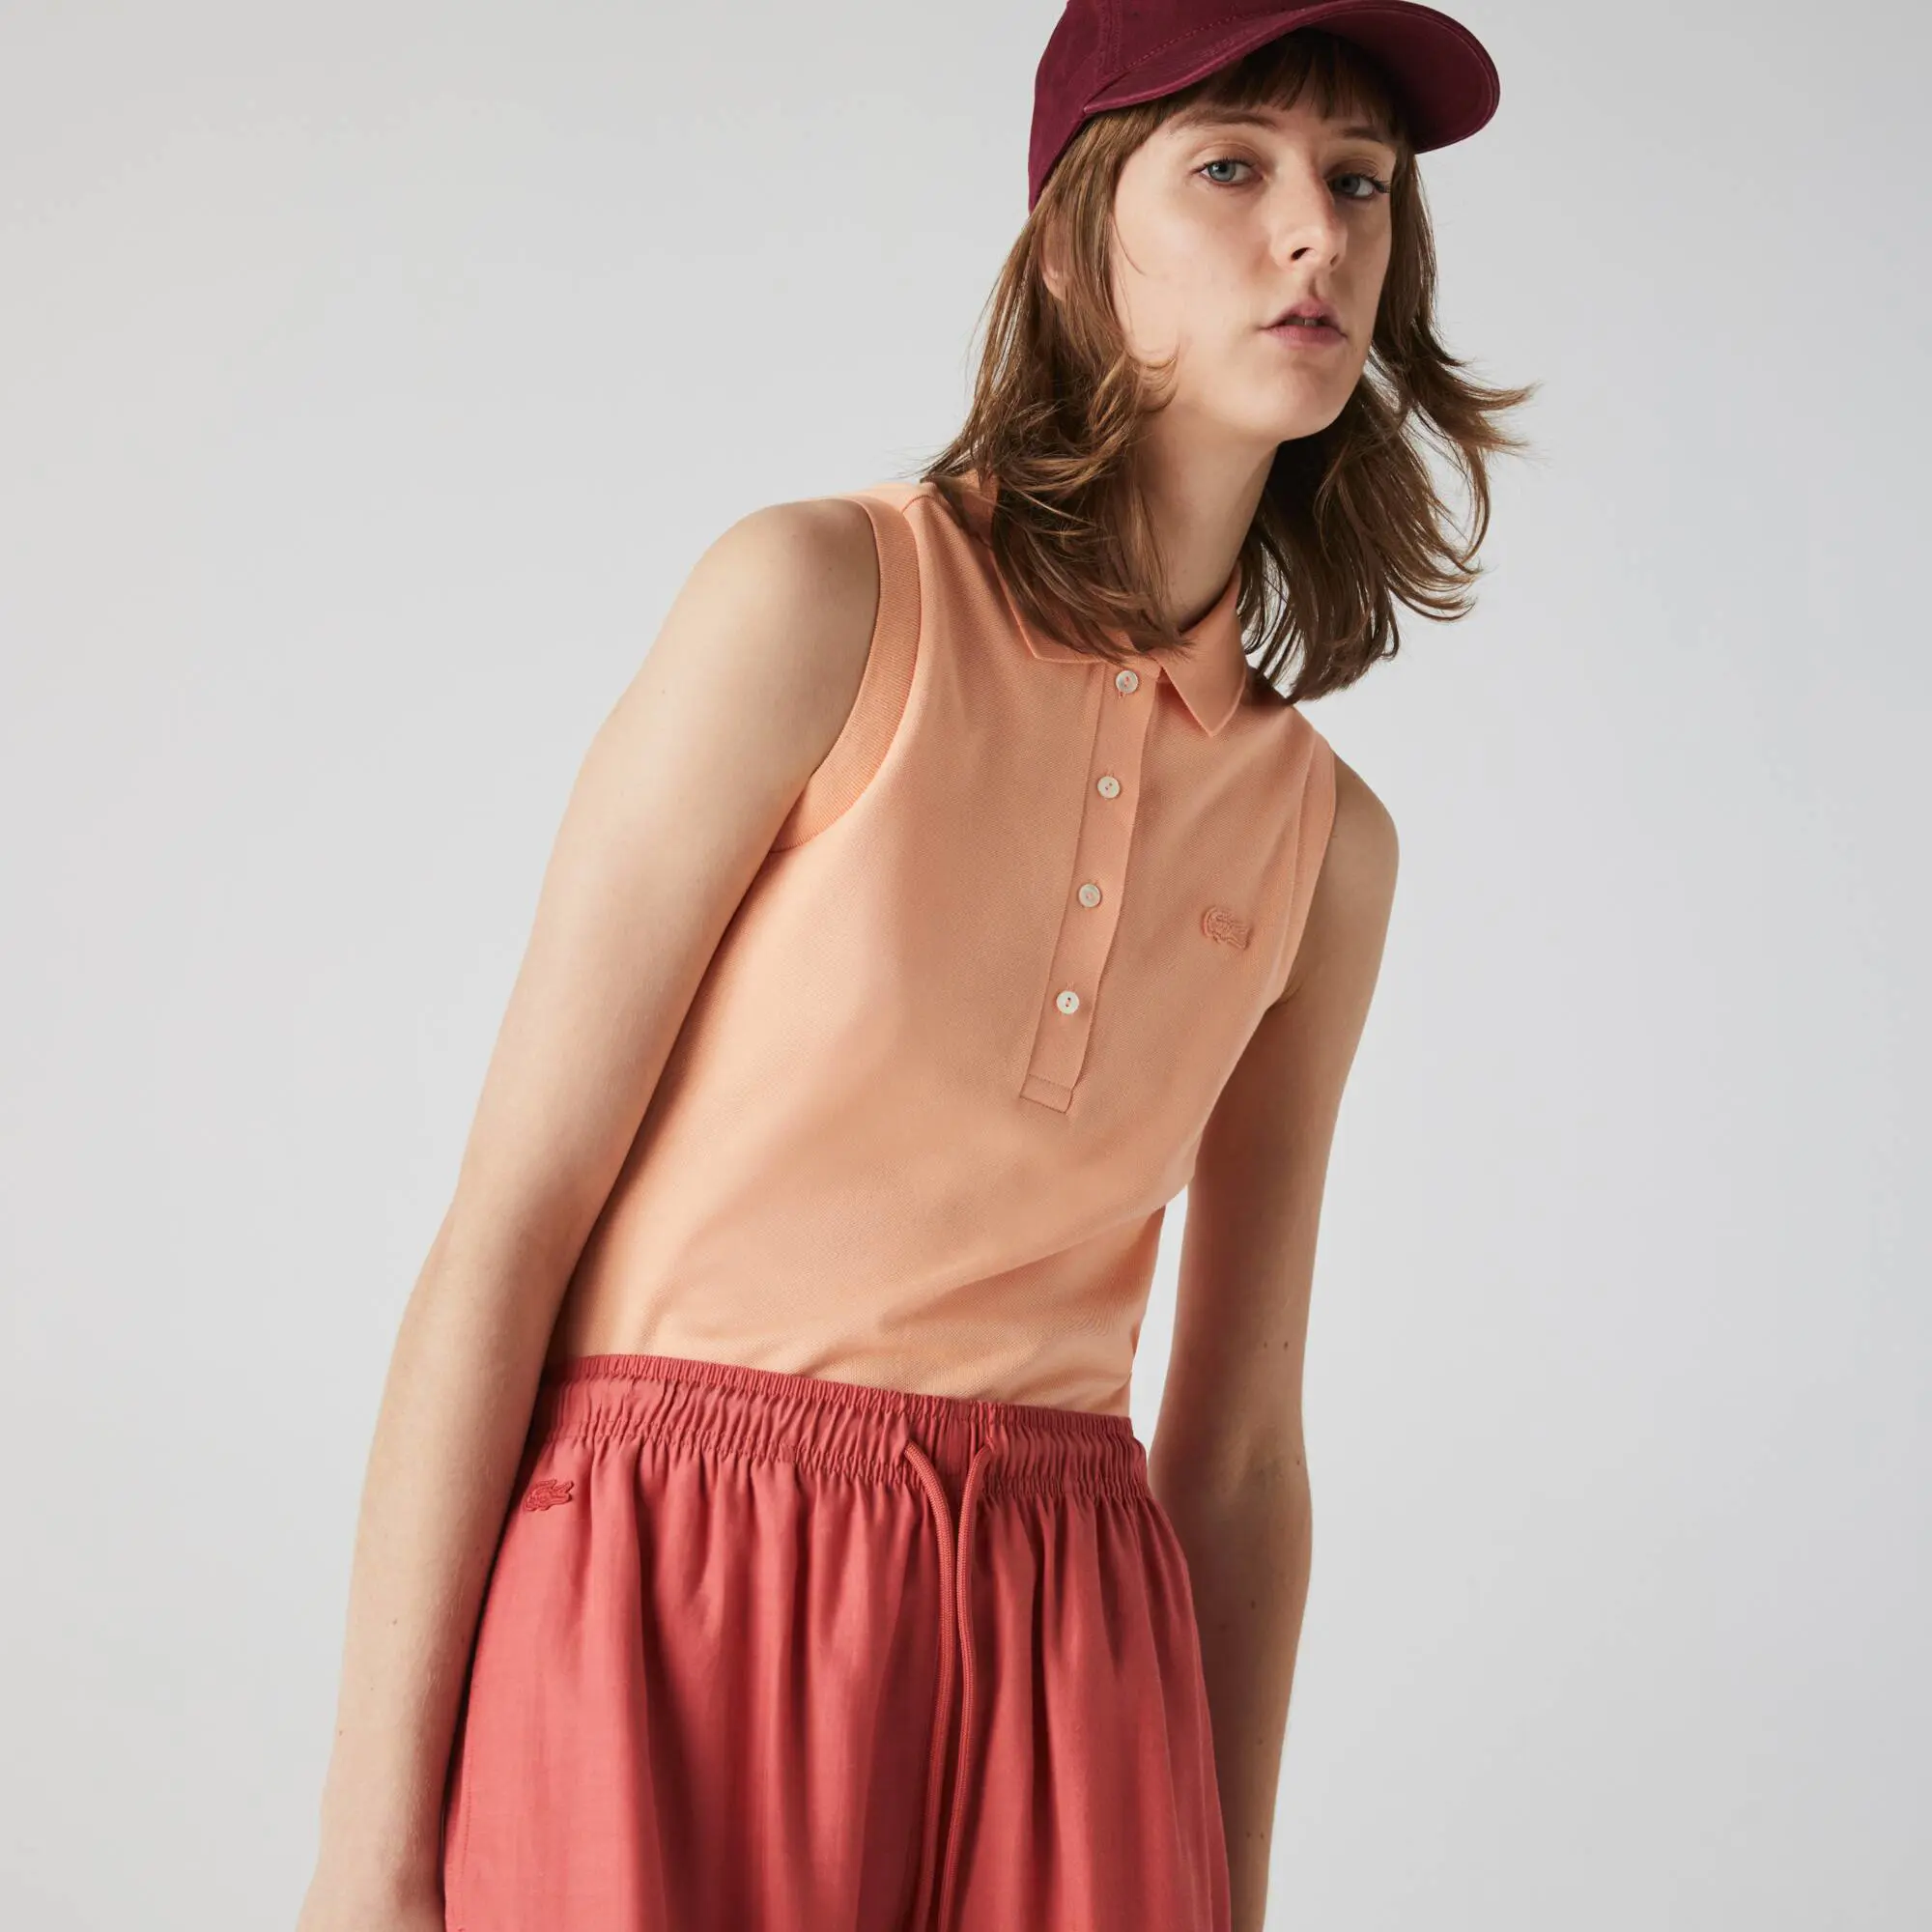 Lacoste Women's Lacoste Slim fit Sleeveless Cotton Piqué Polo Shirt. 1